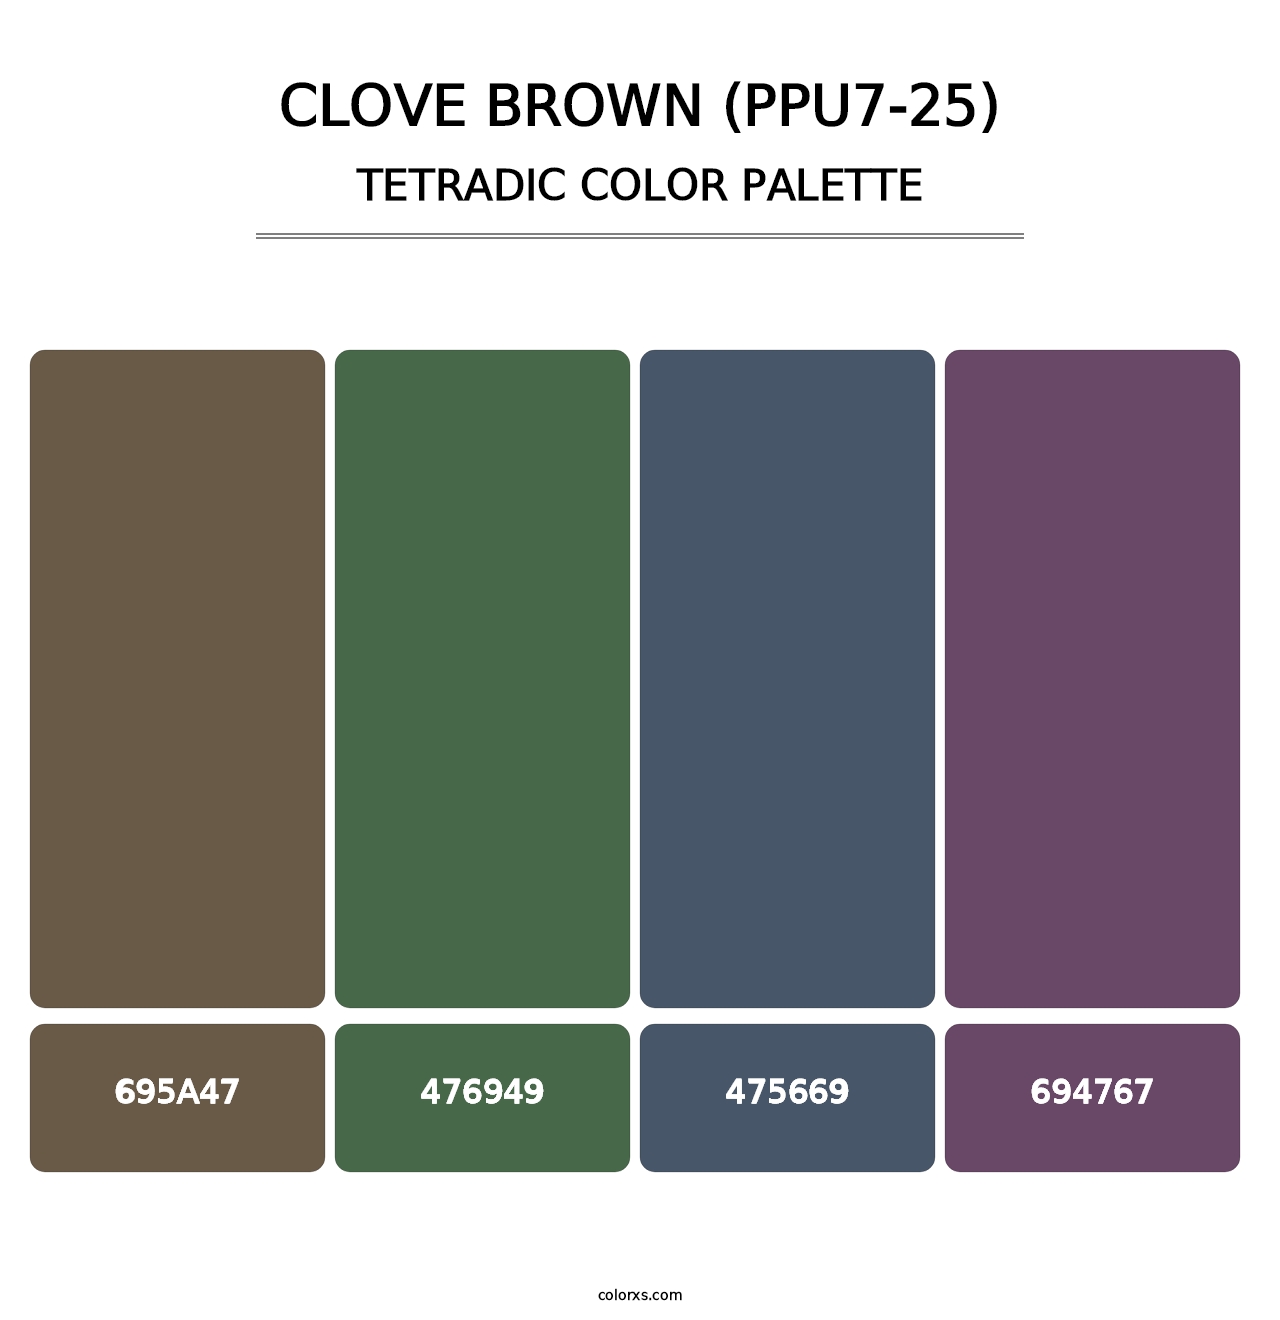 Clove Brown (PPU7-25) - Tetradic Color Palette